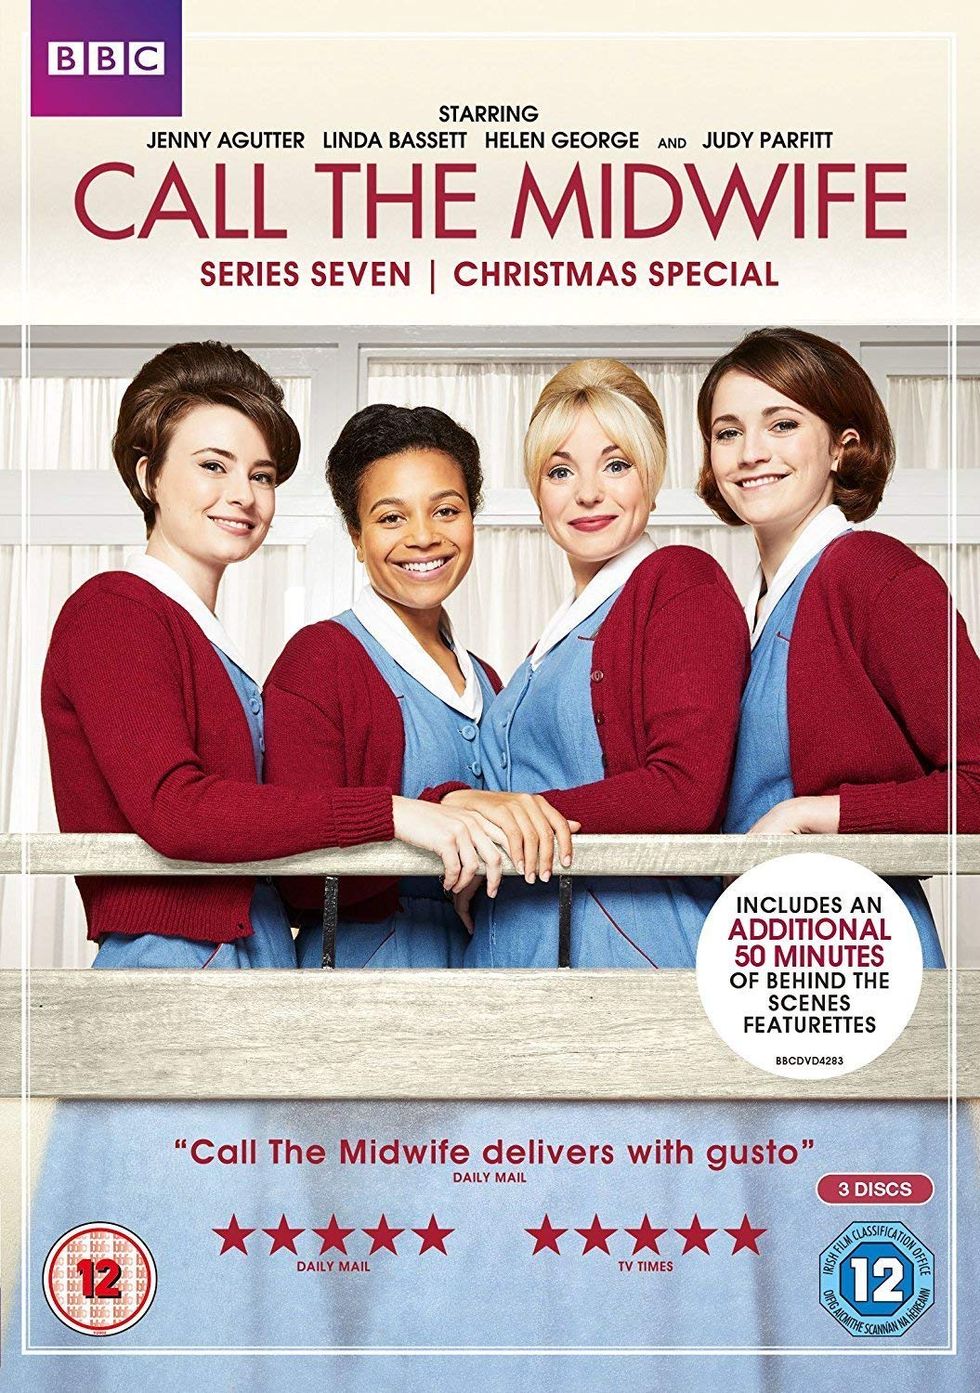 Call The Midwife season 7 DVD